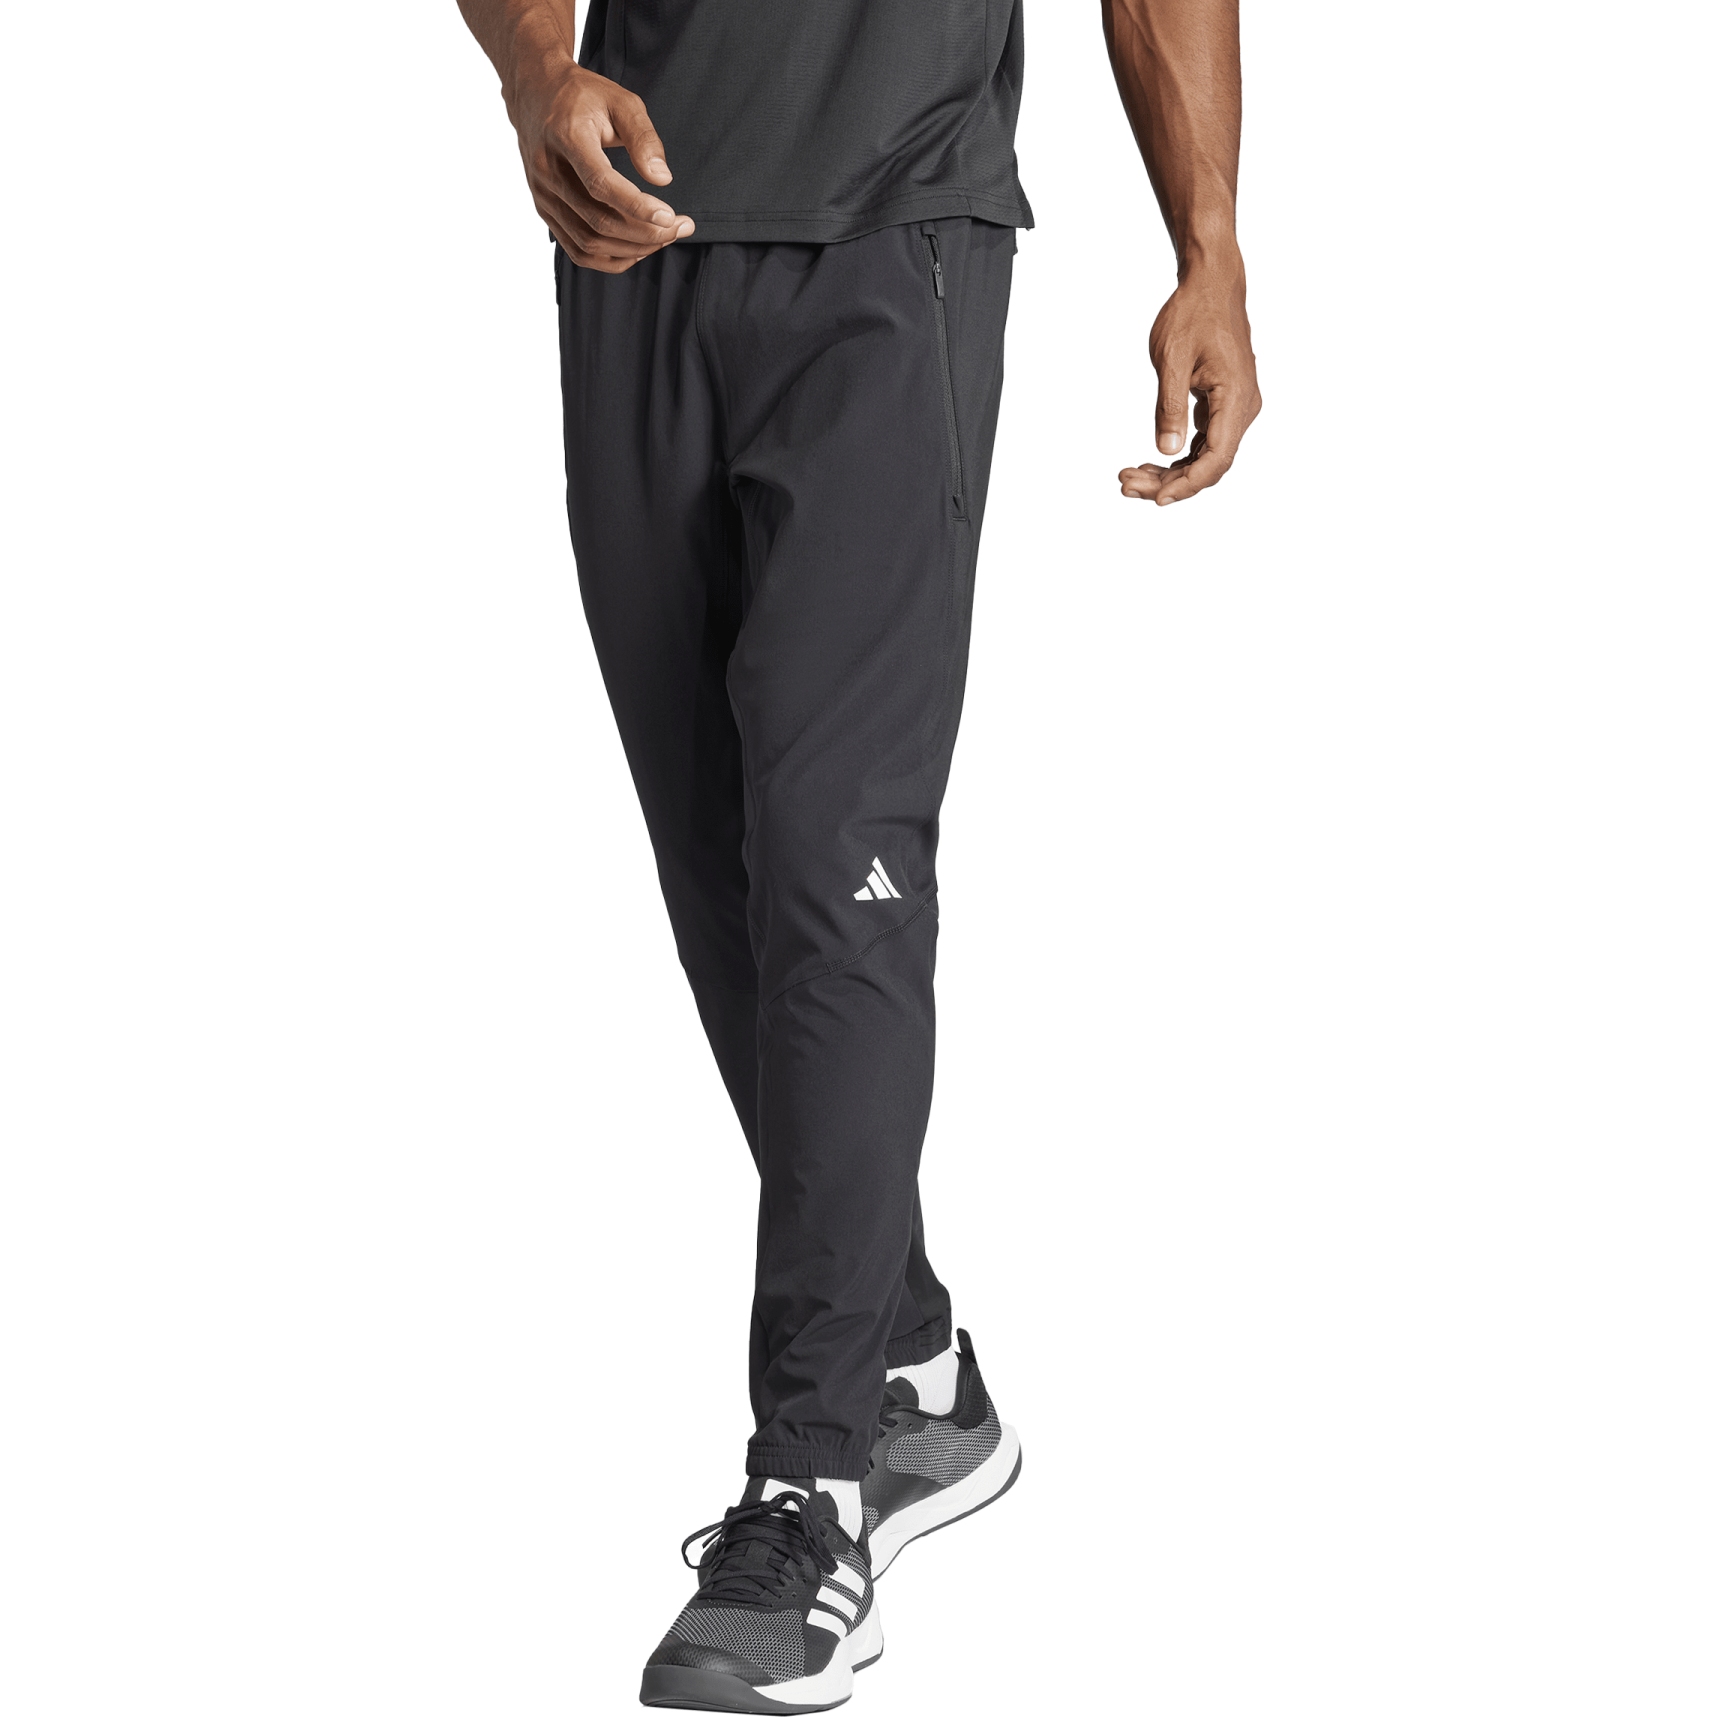 adidas Designed for Training Workout Pants Women - black IK9724